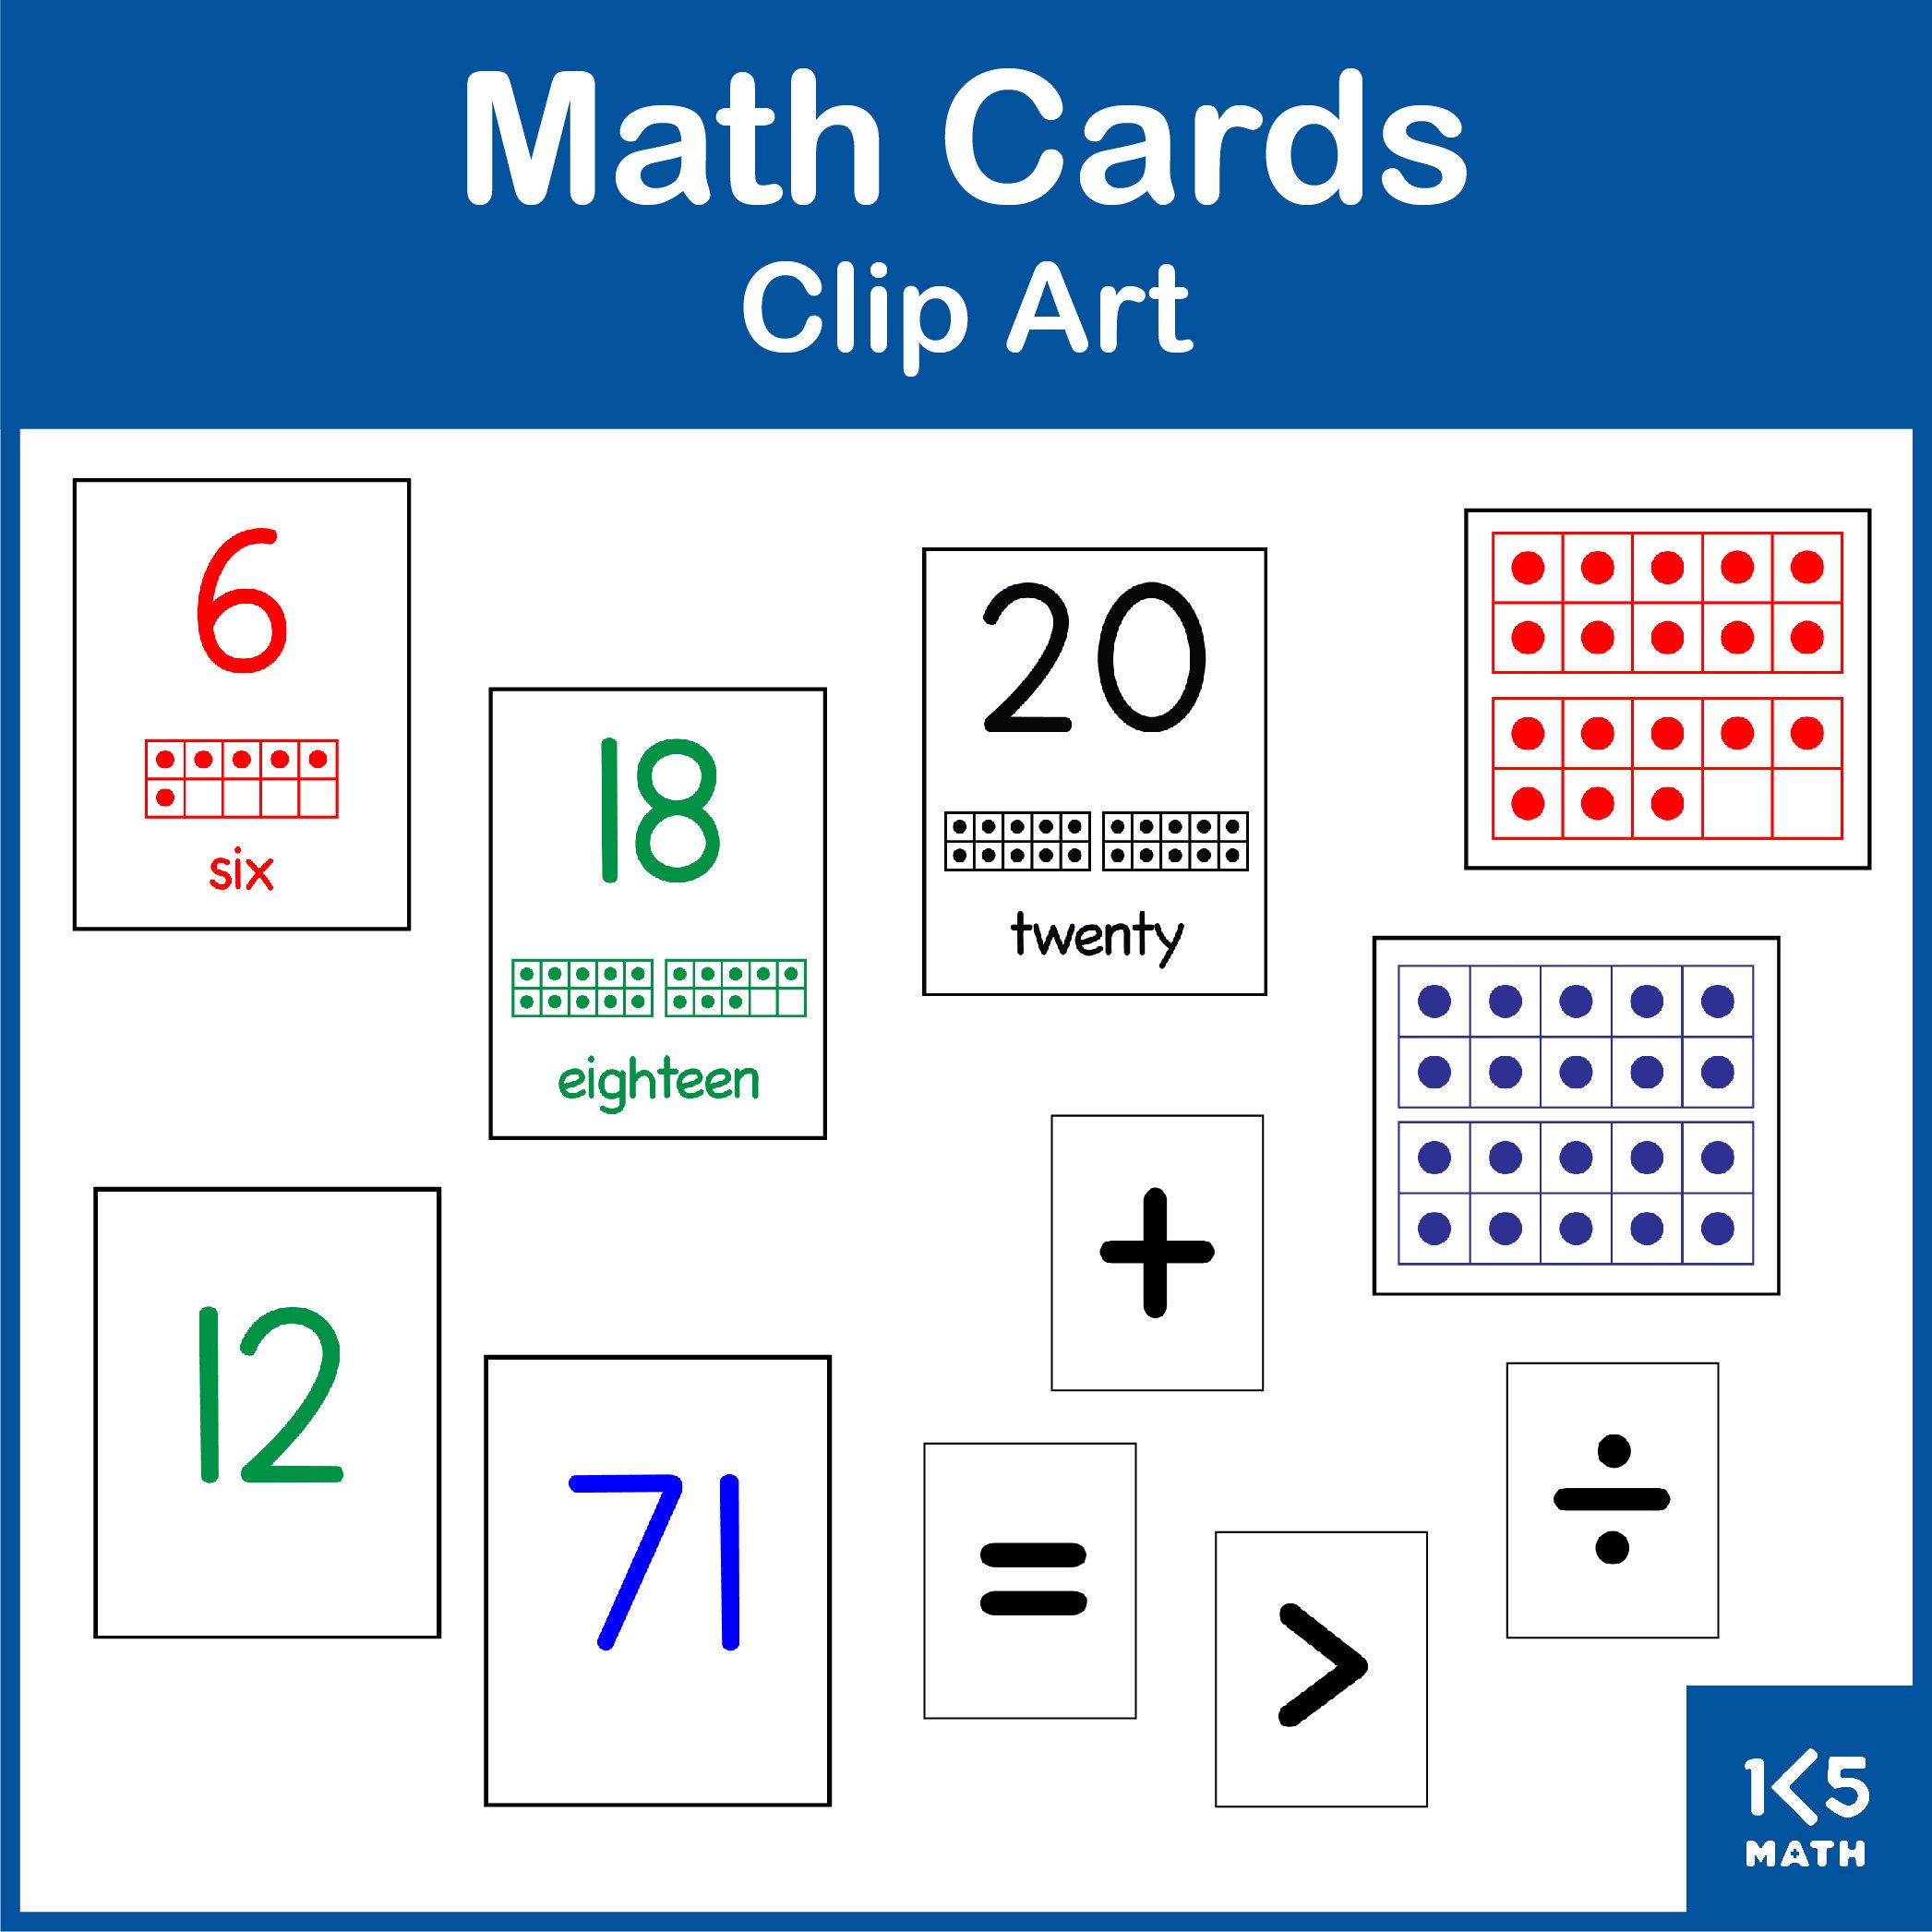 Math Cards Clip Art